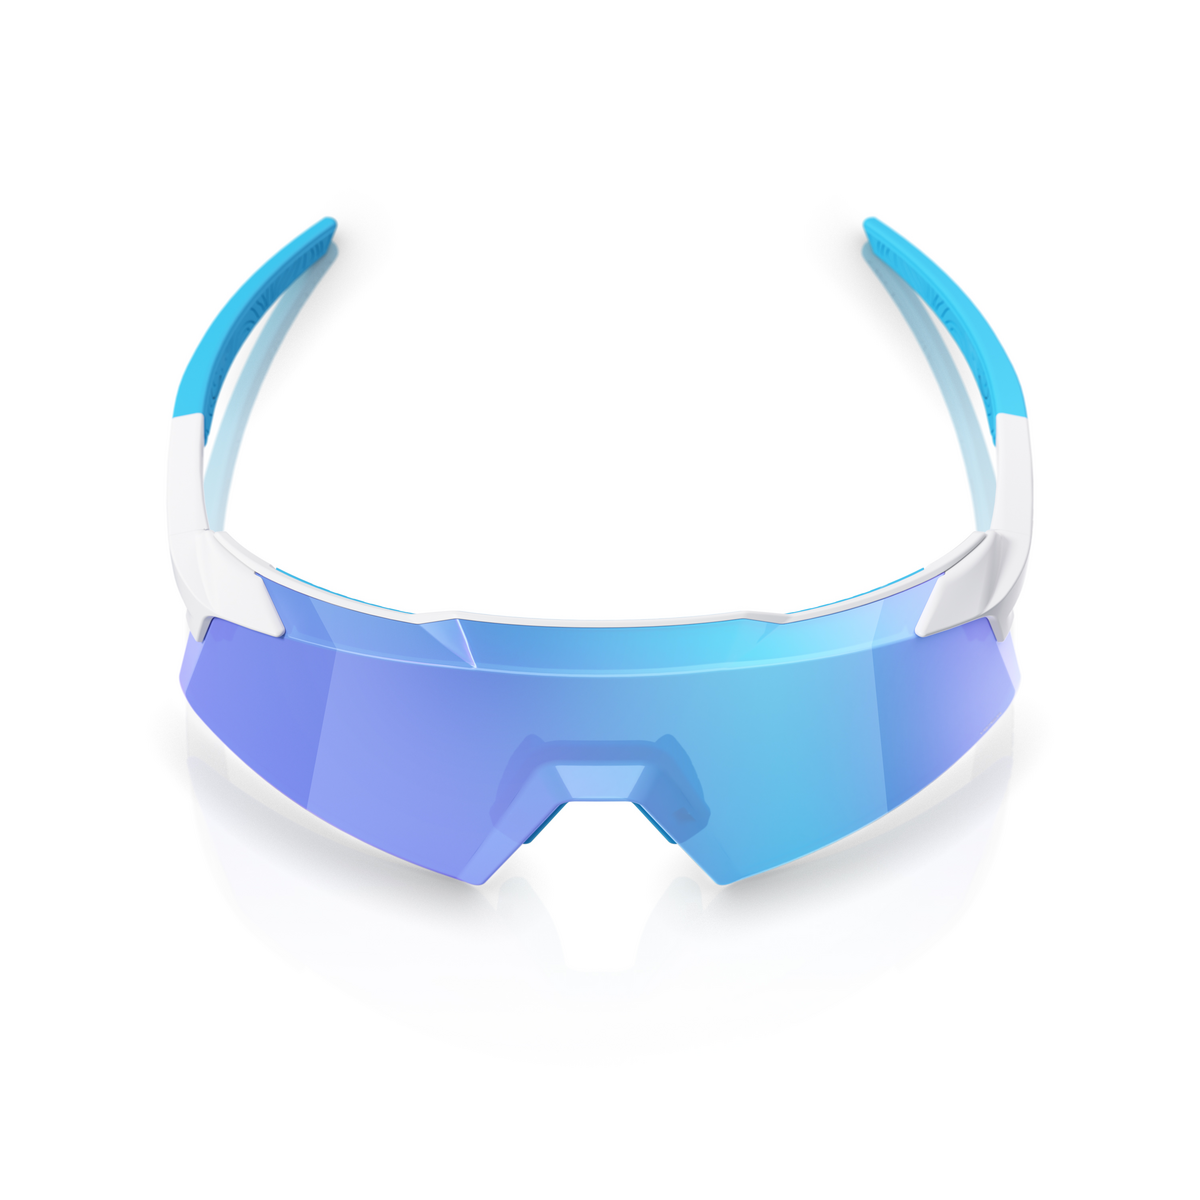 100 Percent Aerocraft Sunglasses - One Size Fits Most - Matte White - HiPER Blue Mirror Lens